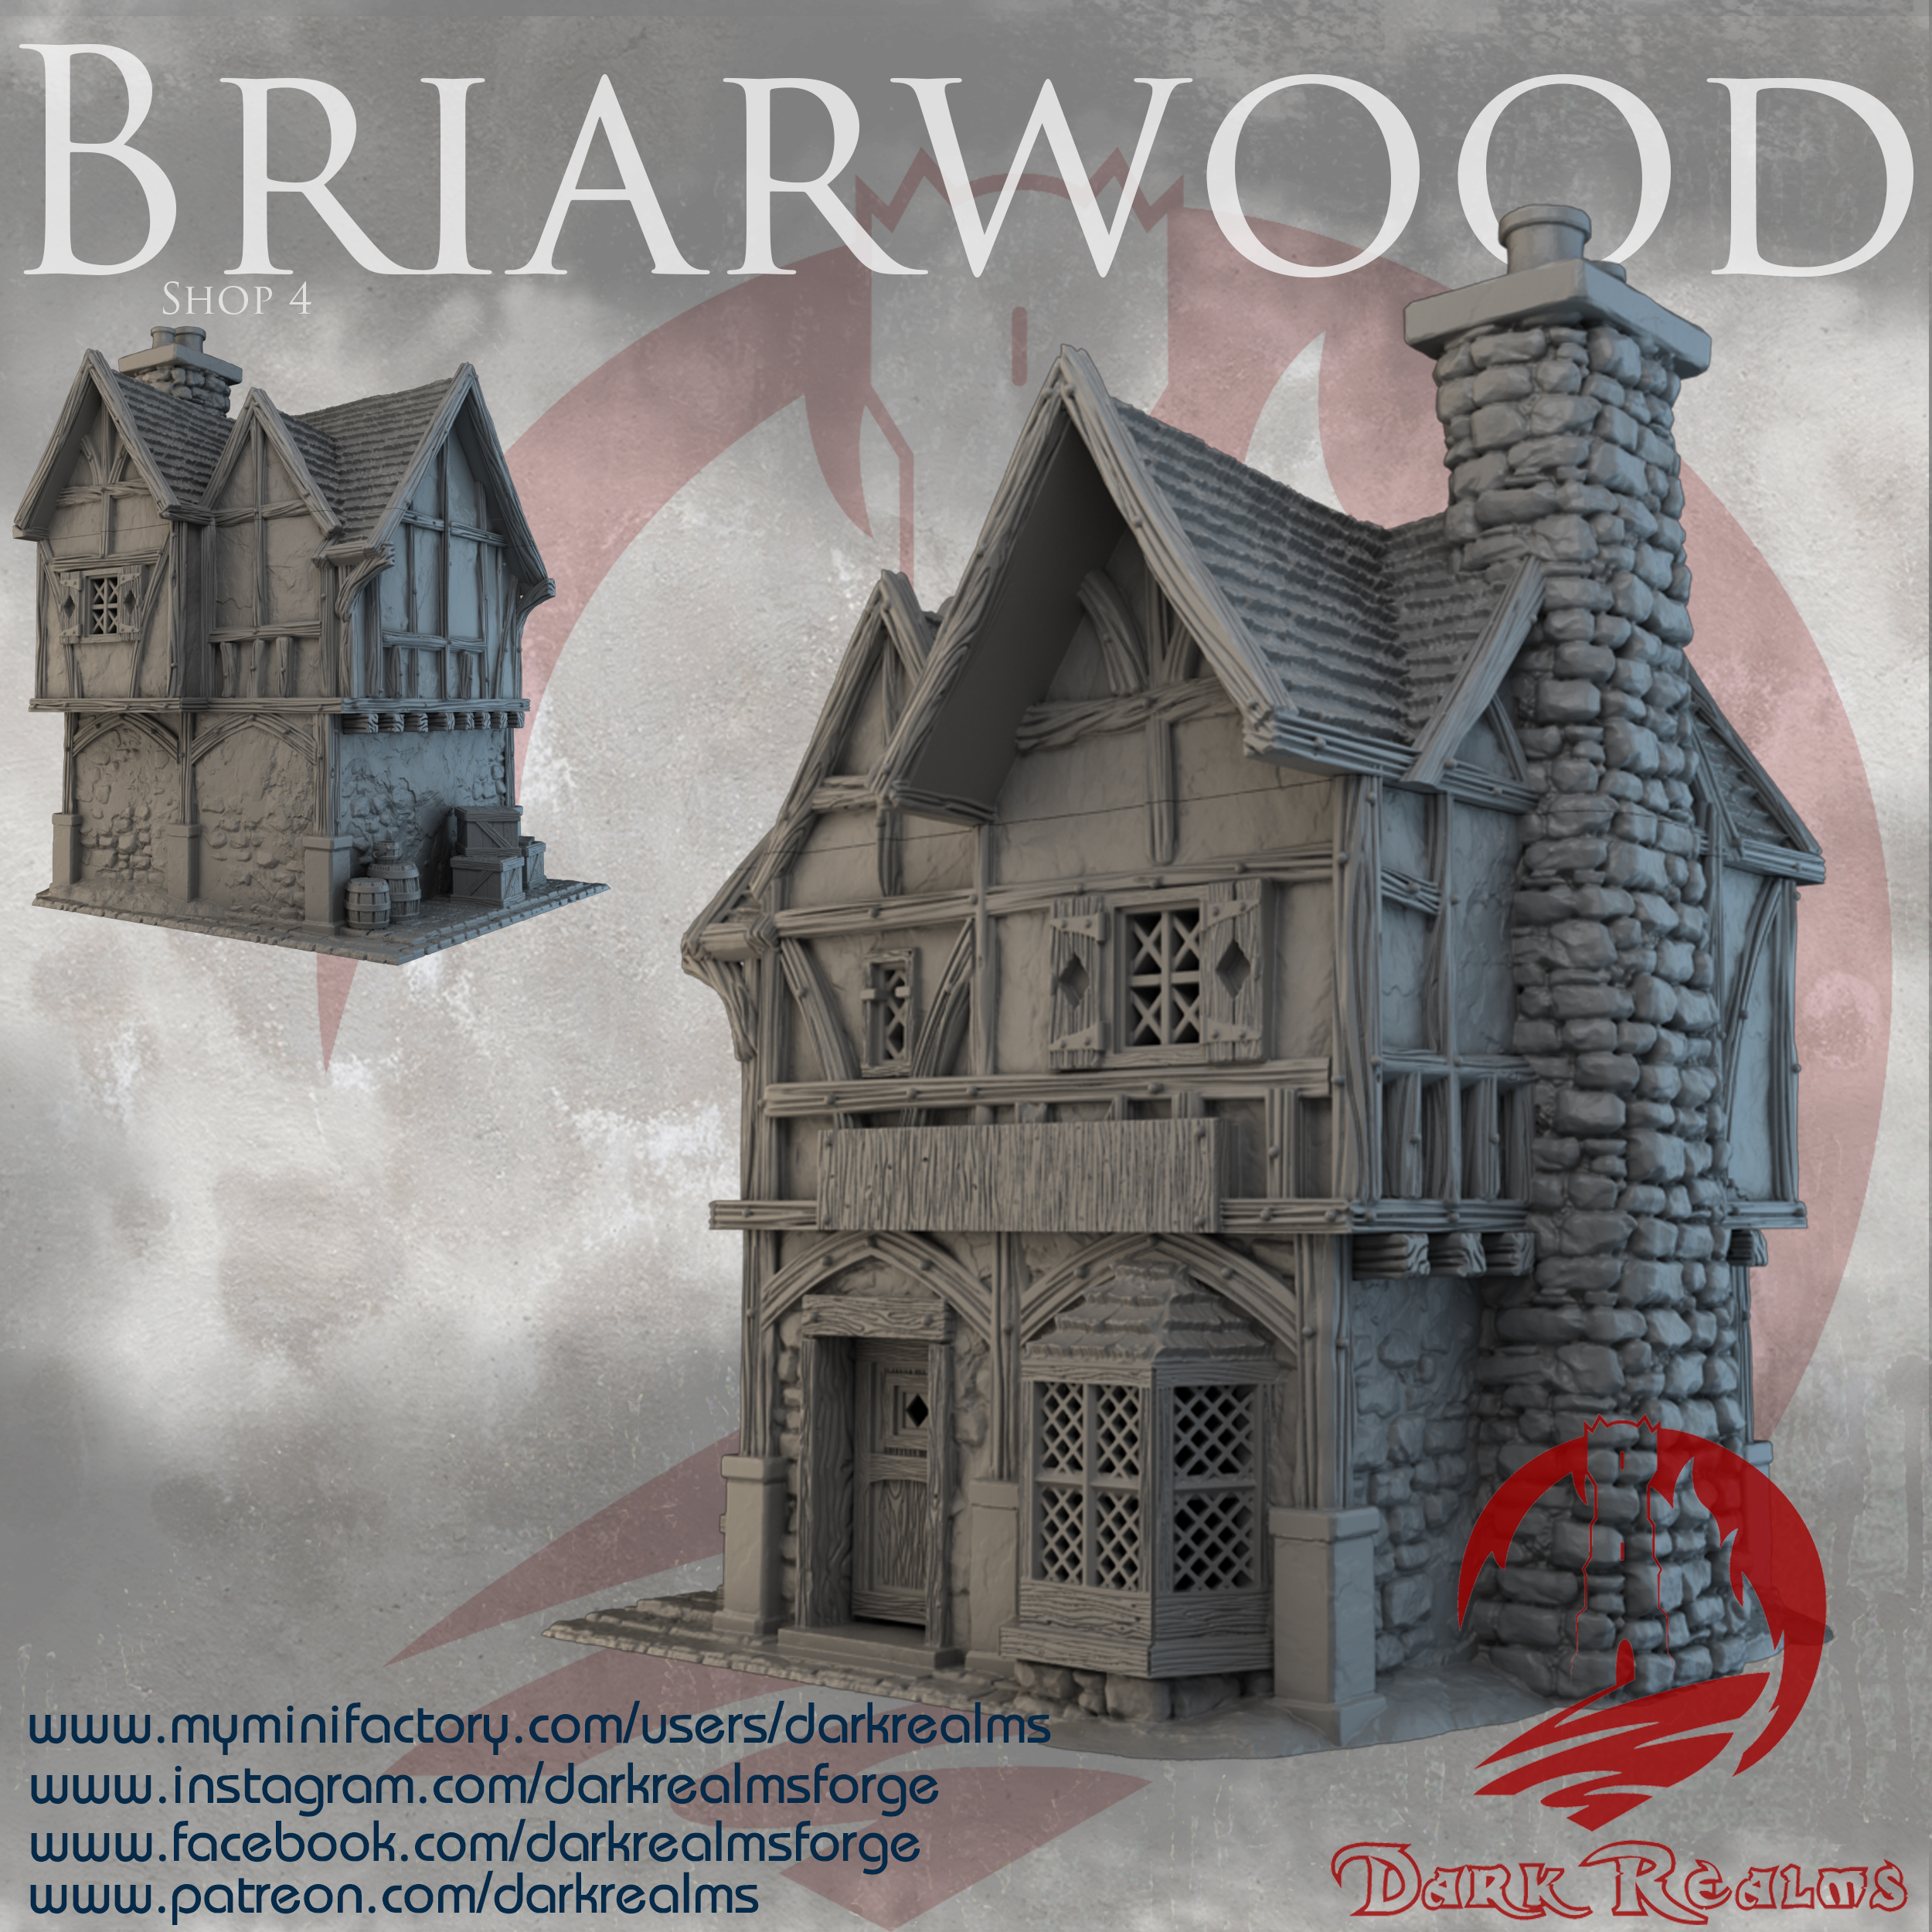 Briarwood - Shop 4